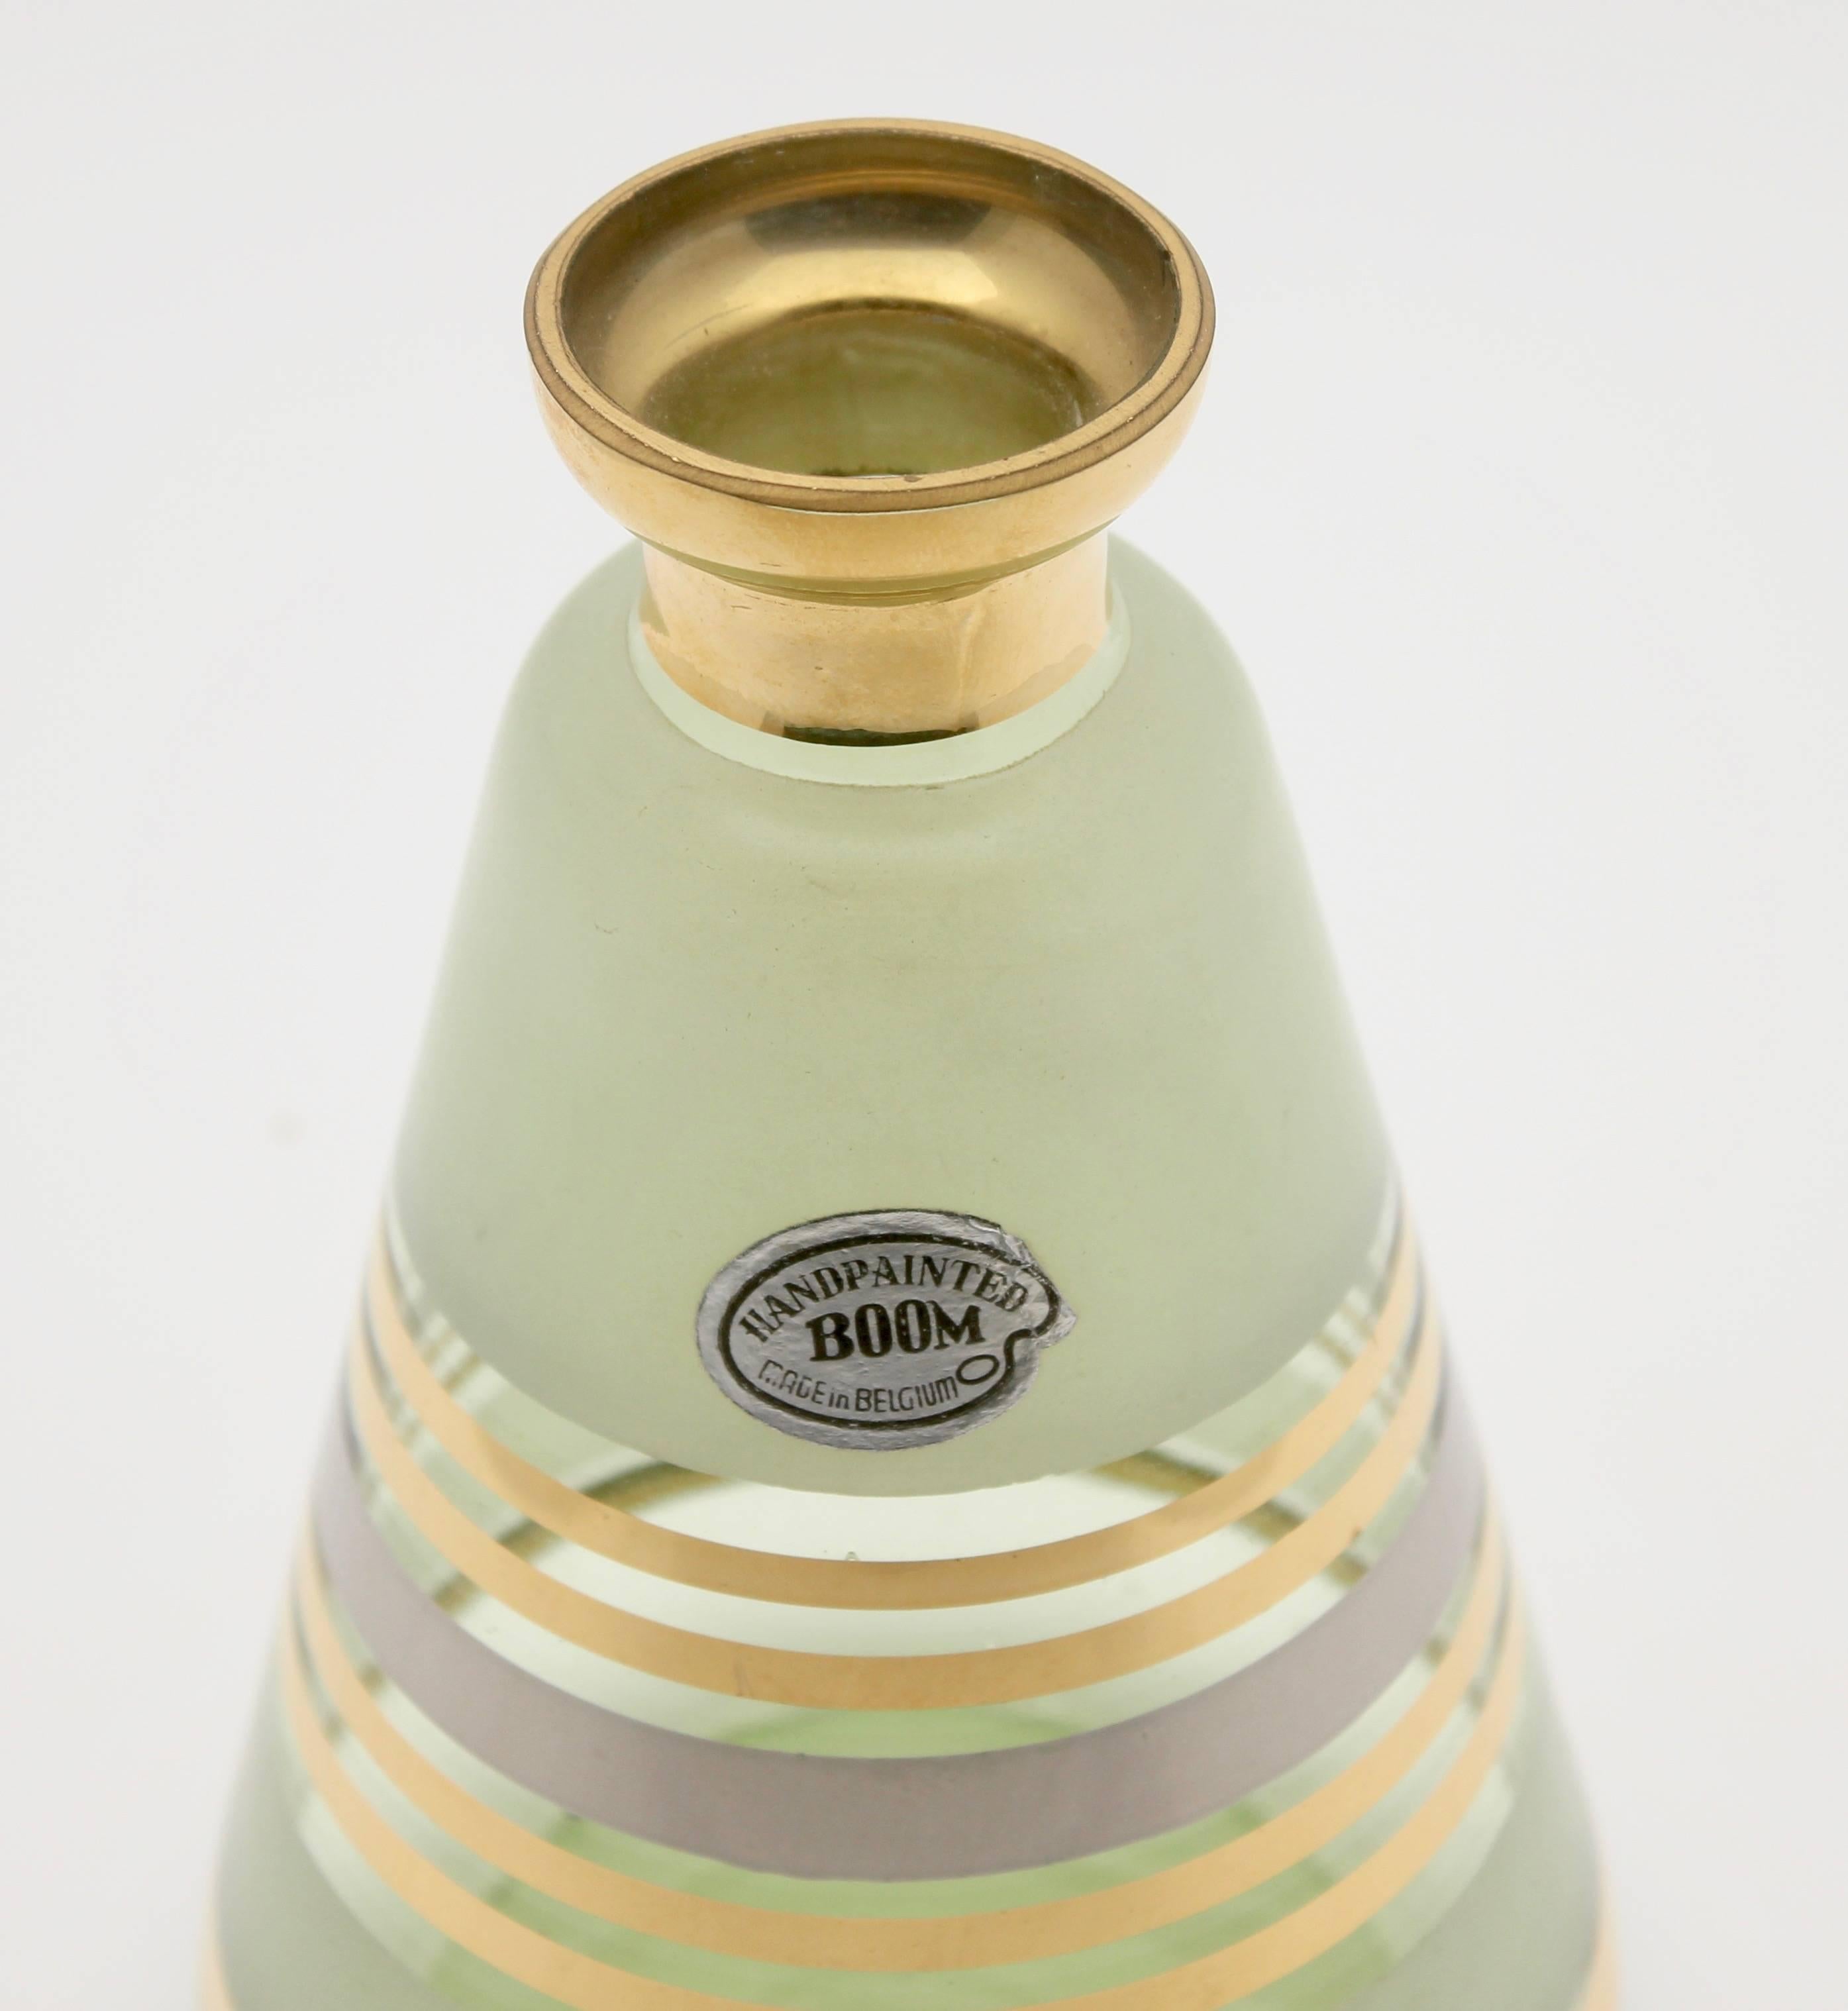 Glass Liqueur Set by De Rupel, Boom, Belgium, with Label, circa 1935